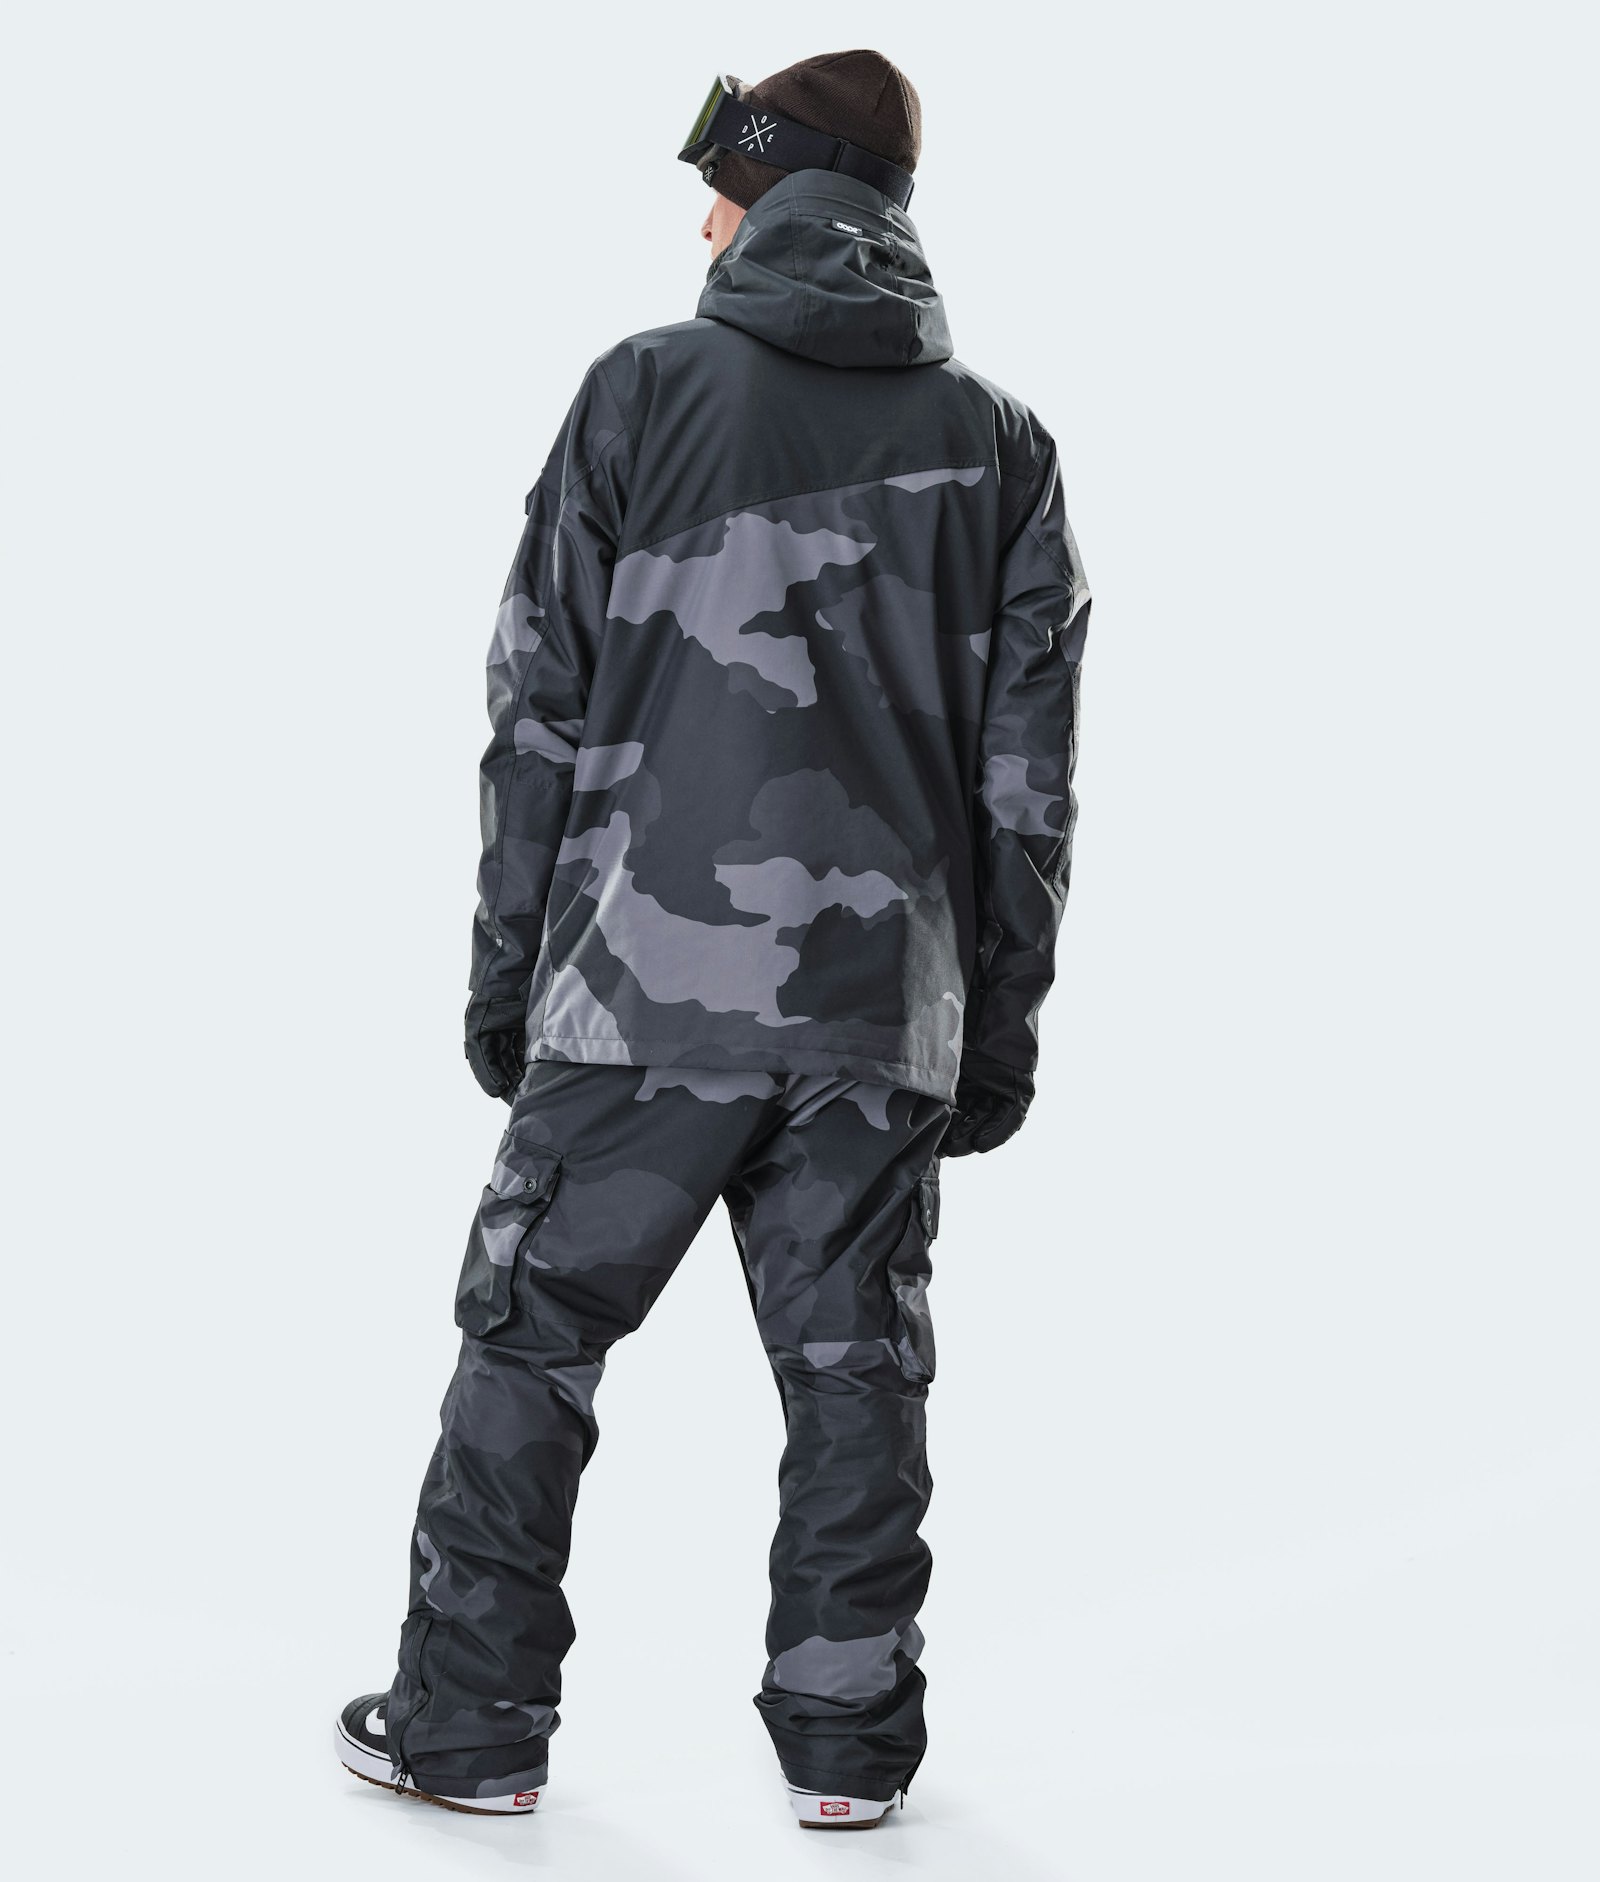 Adept 2020 Veste Snowboard Homme Black/Black Camo